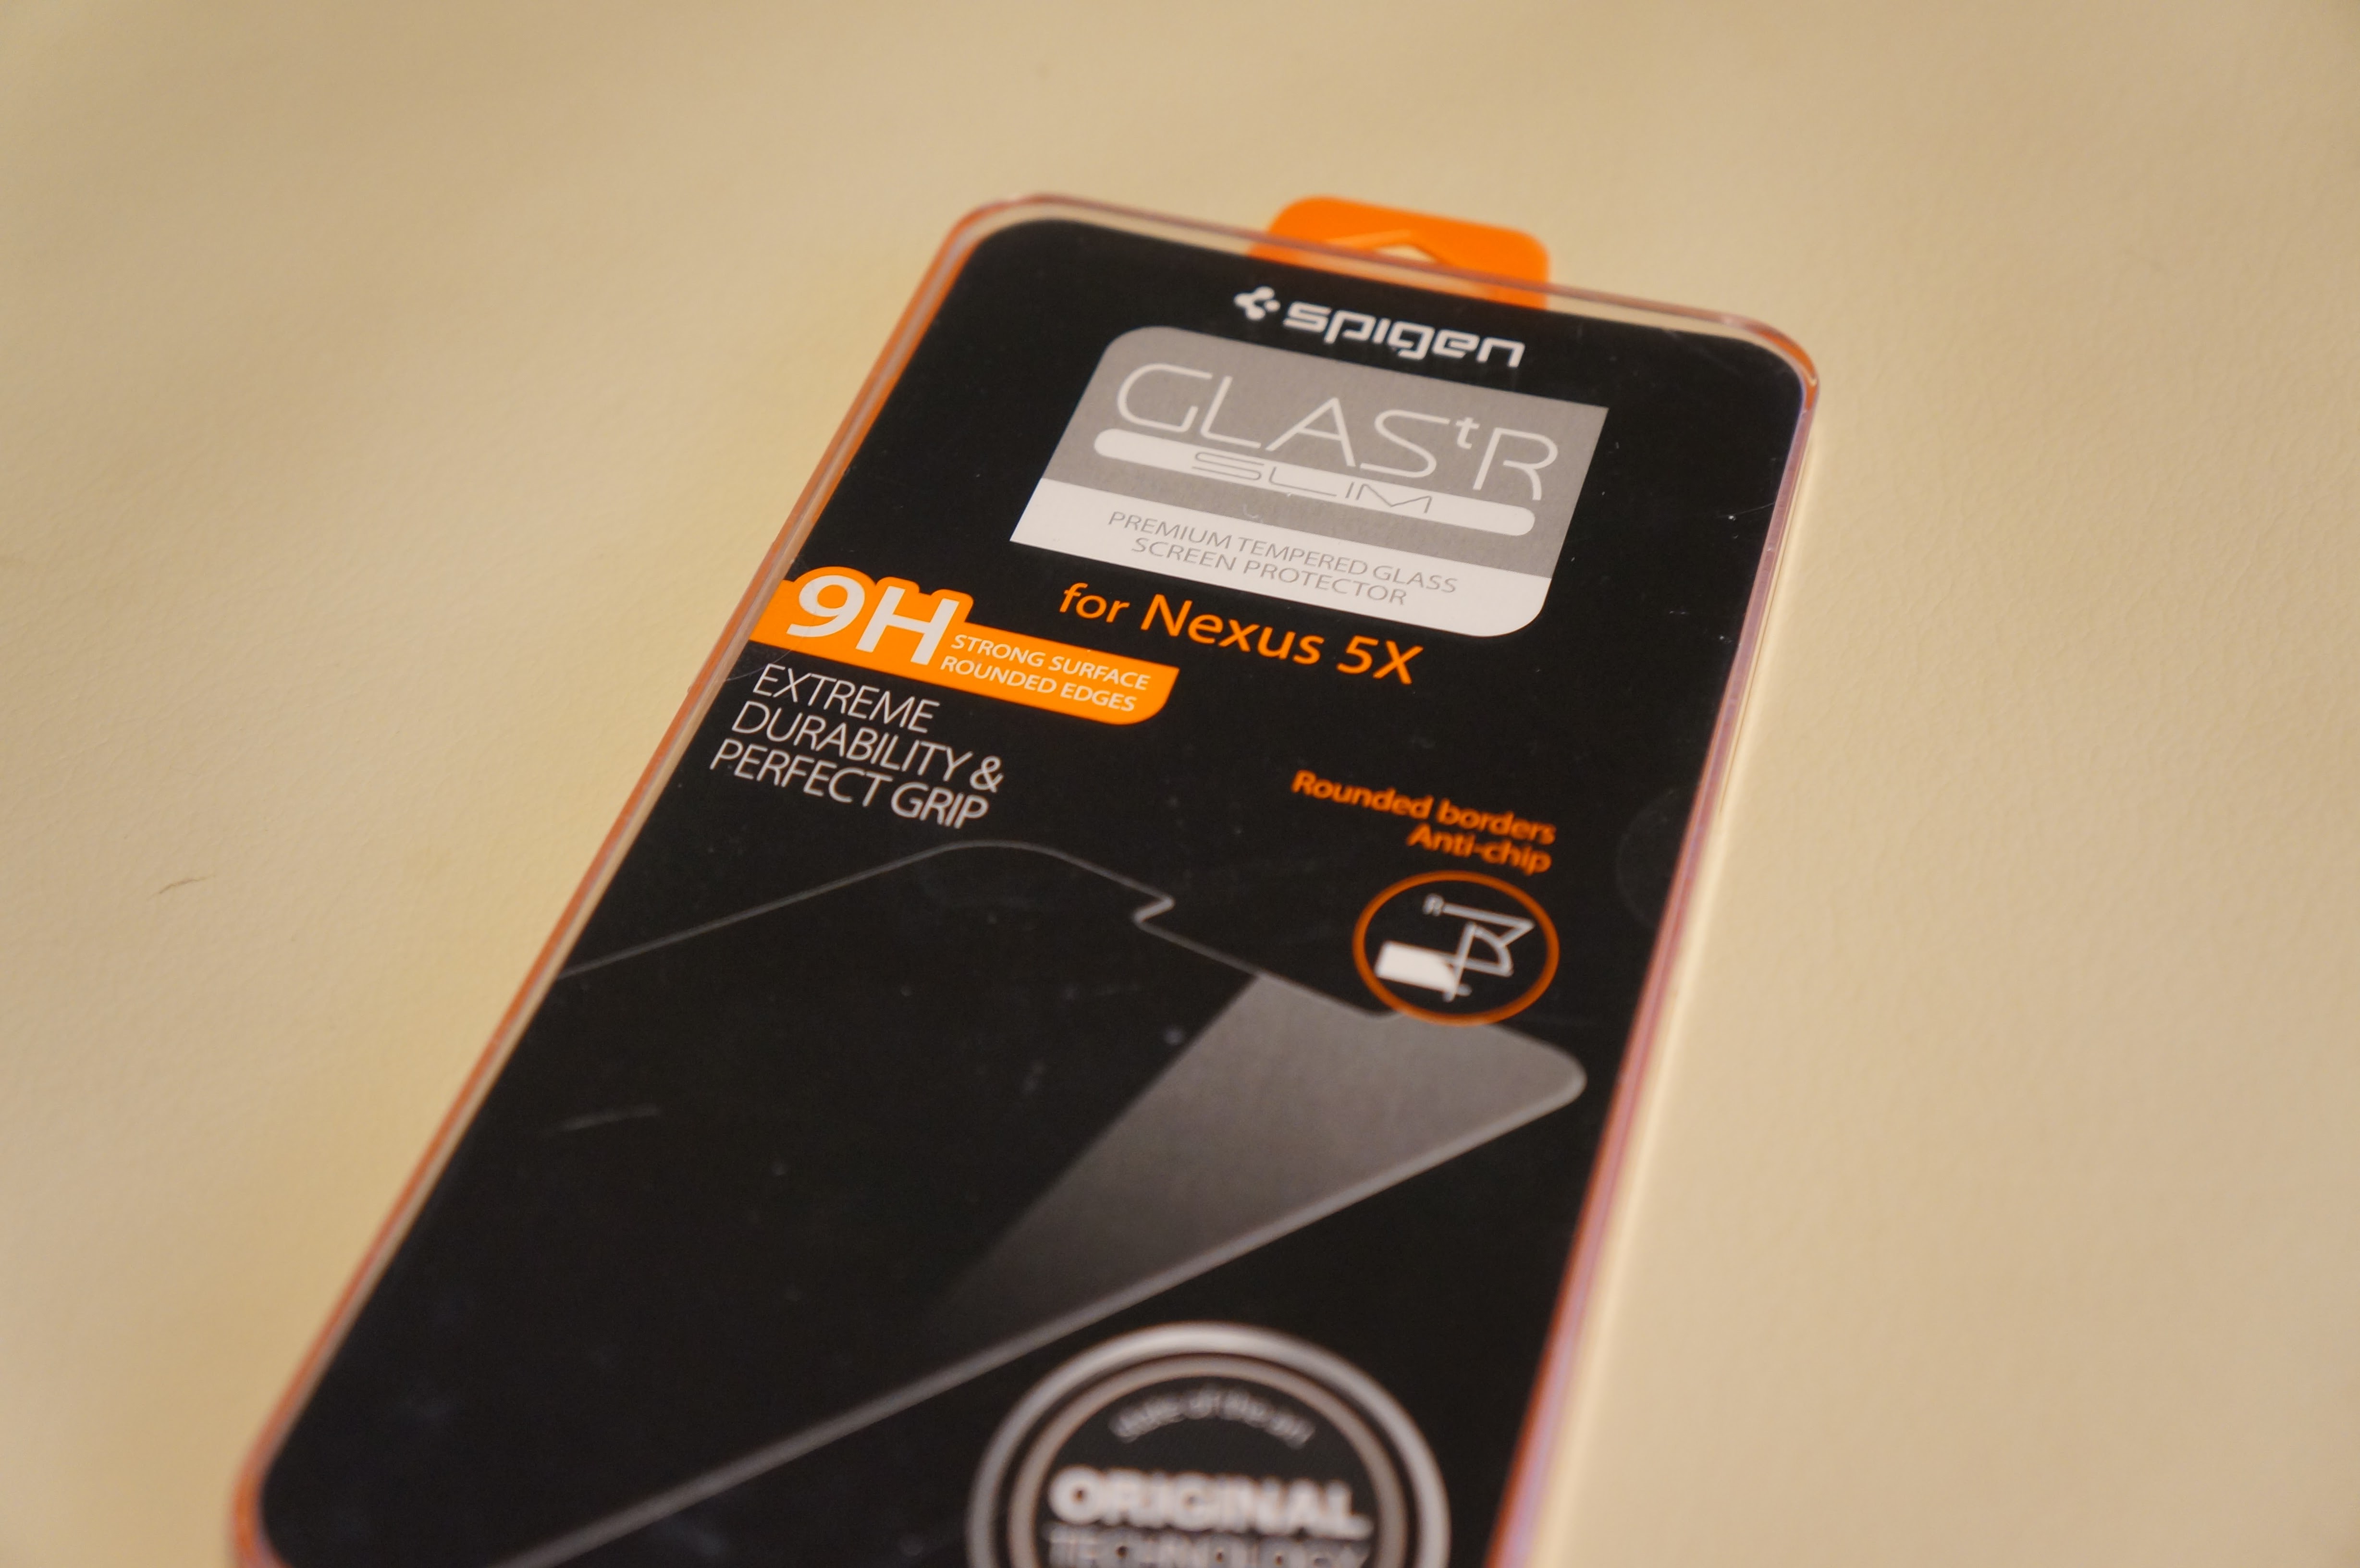 【Spigen】 Nexus 5X ガラスフィルム GLAS.tR SLIM  液晶保護 9H硬度 Rラウンド 加工  ネクサス 5x 用